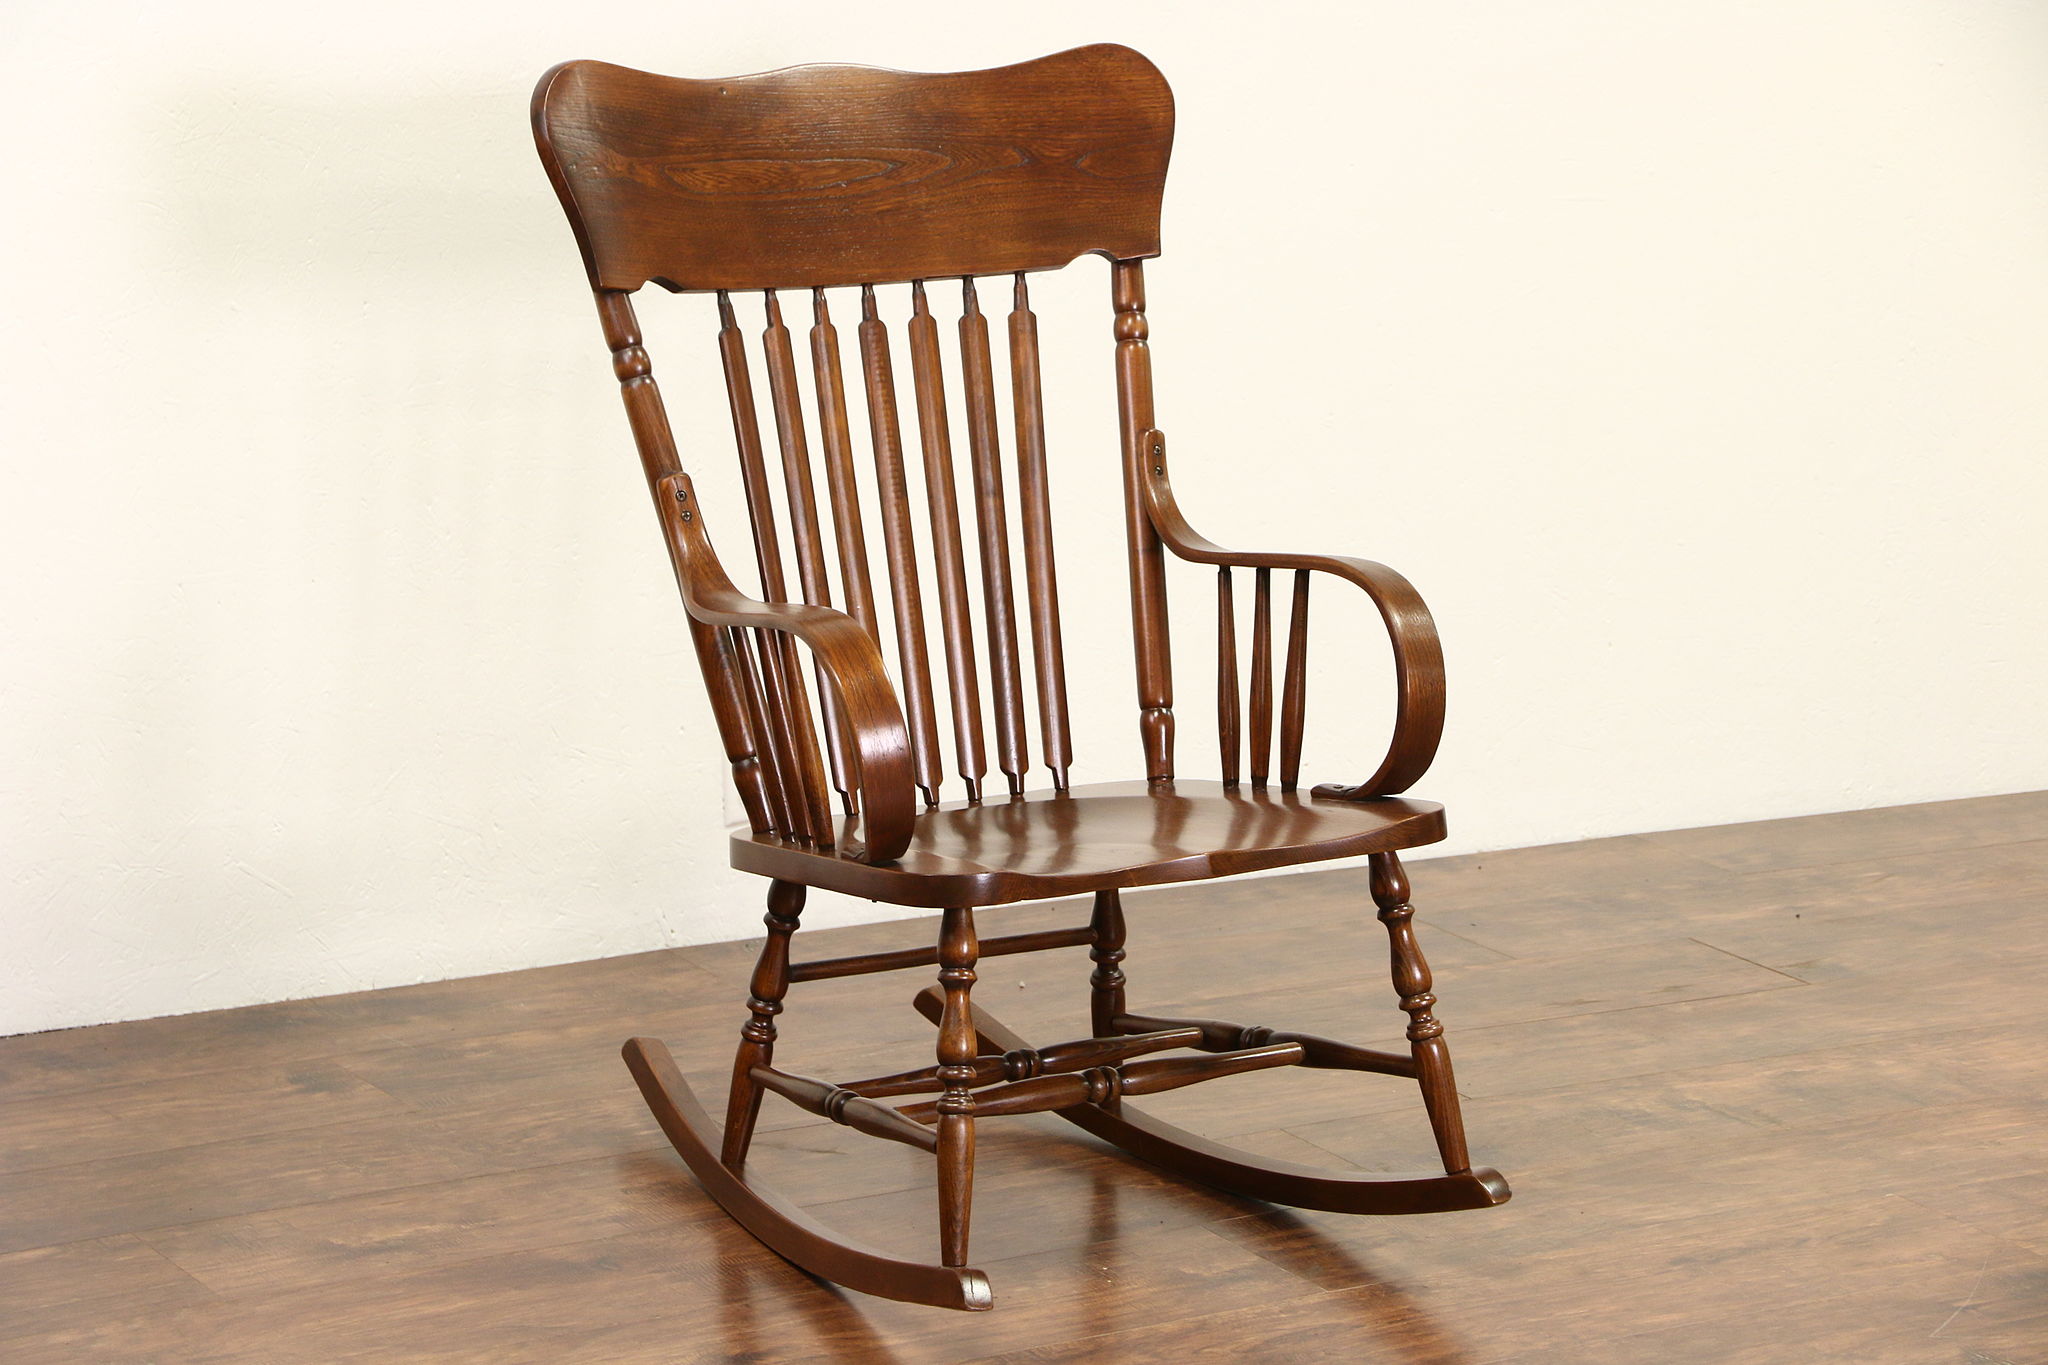 Sold Rocking Chair 1900 Antique Elm Oak Large Rocker Harp